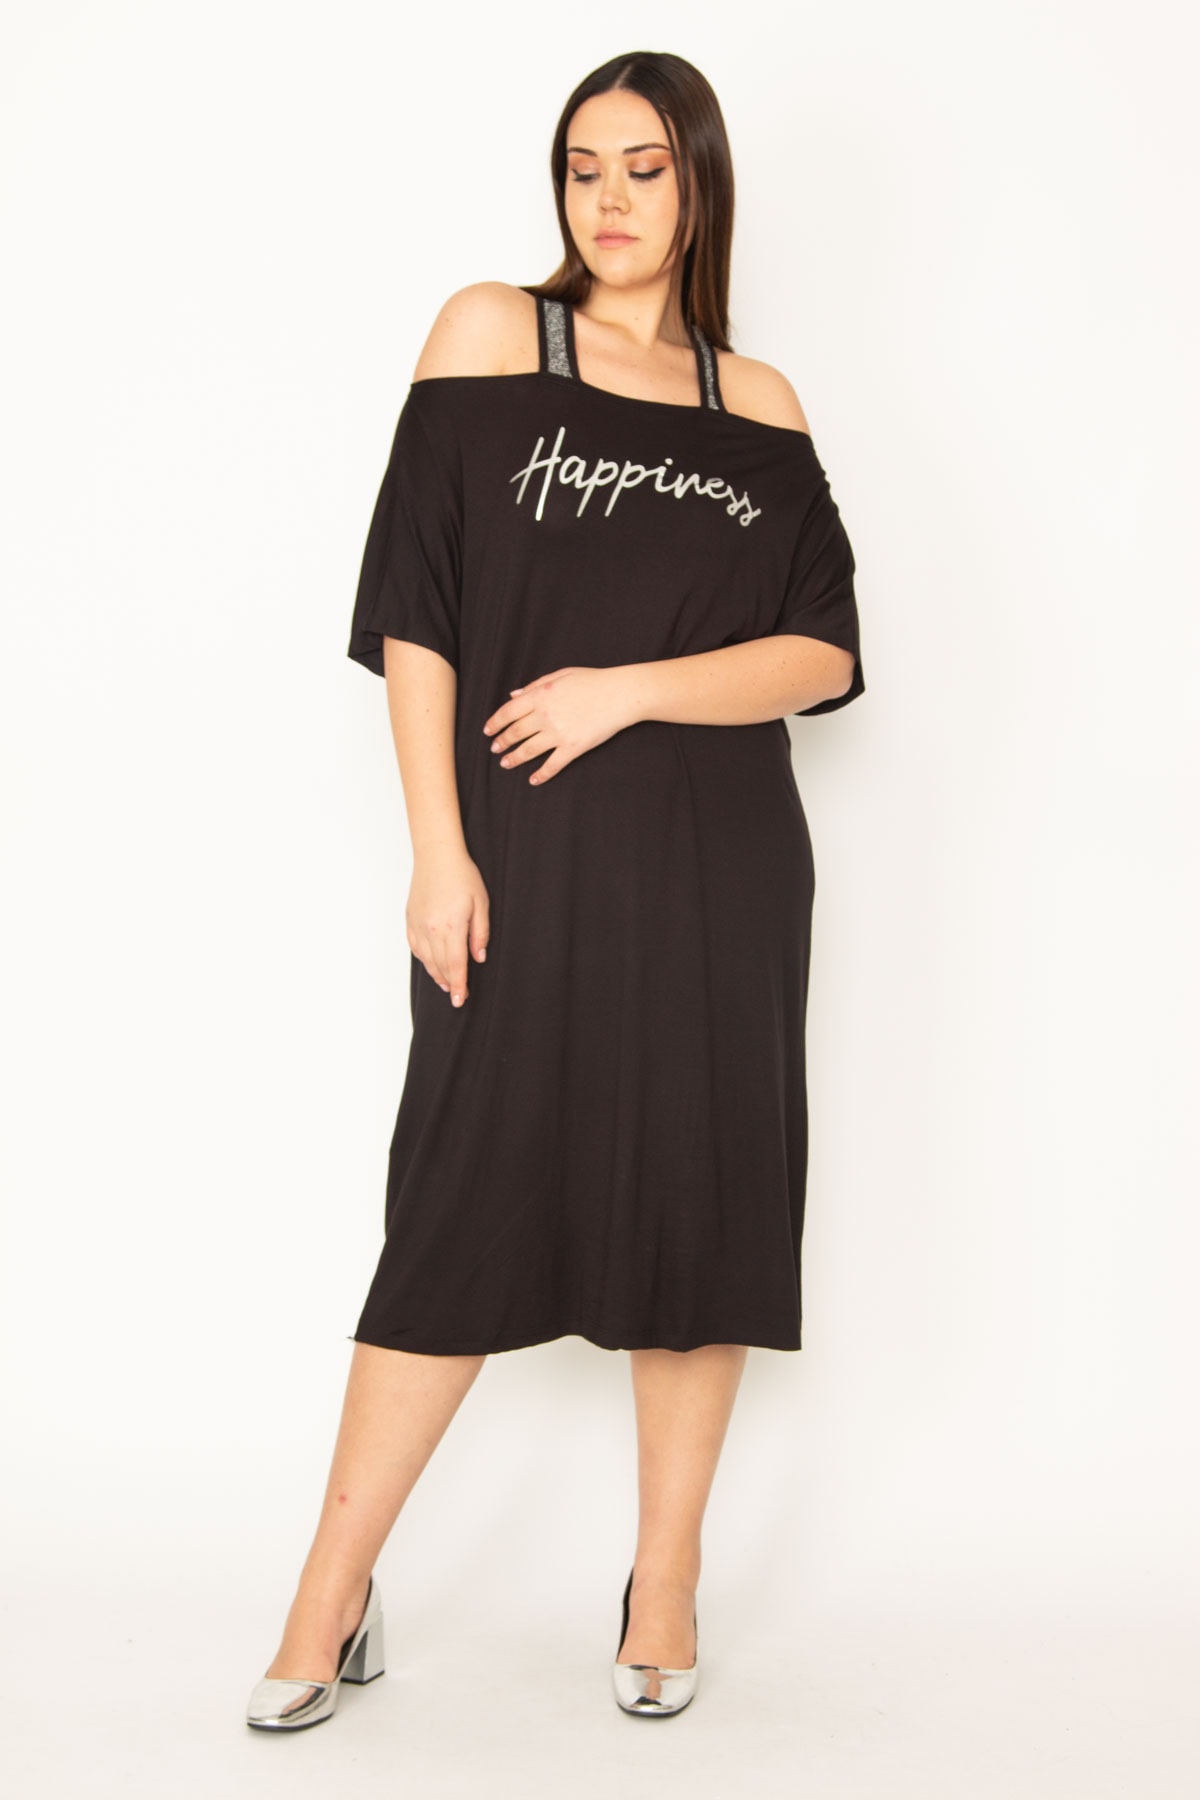 Şans Women's Plus Size Black Silvery Detailed Front Printed Viscose Dress